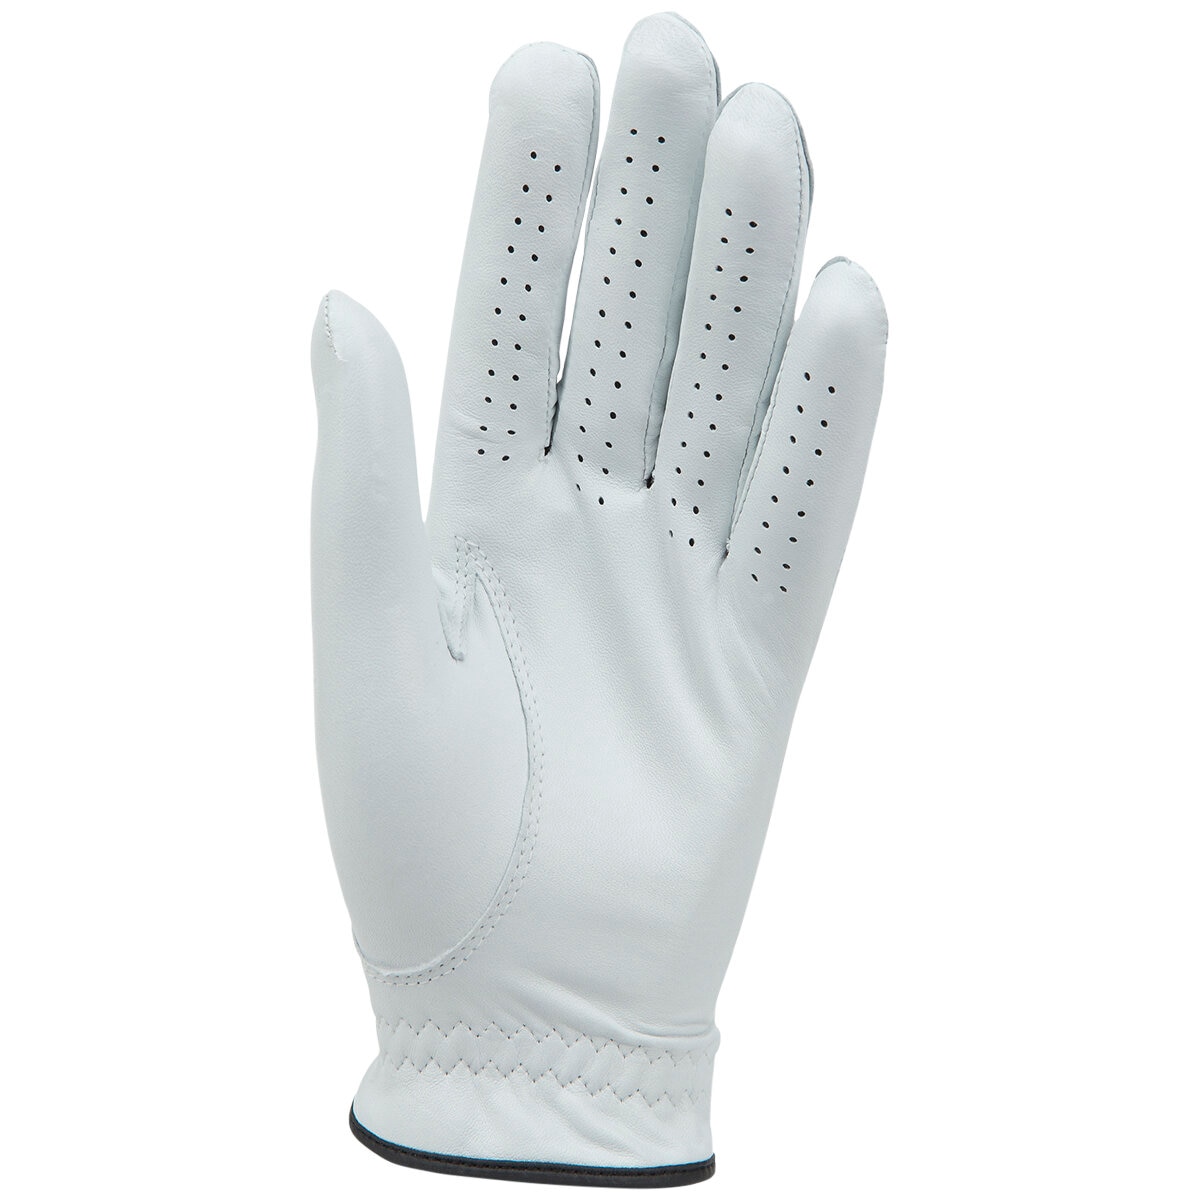 Kirkland Signiture Men's Premium Golf Gloves 4 pack